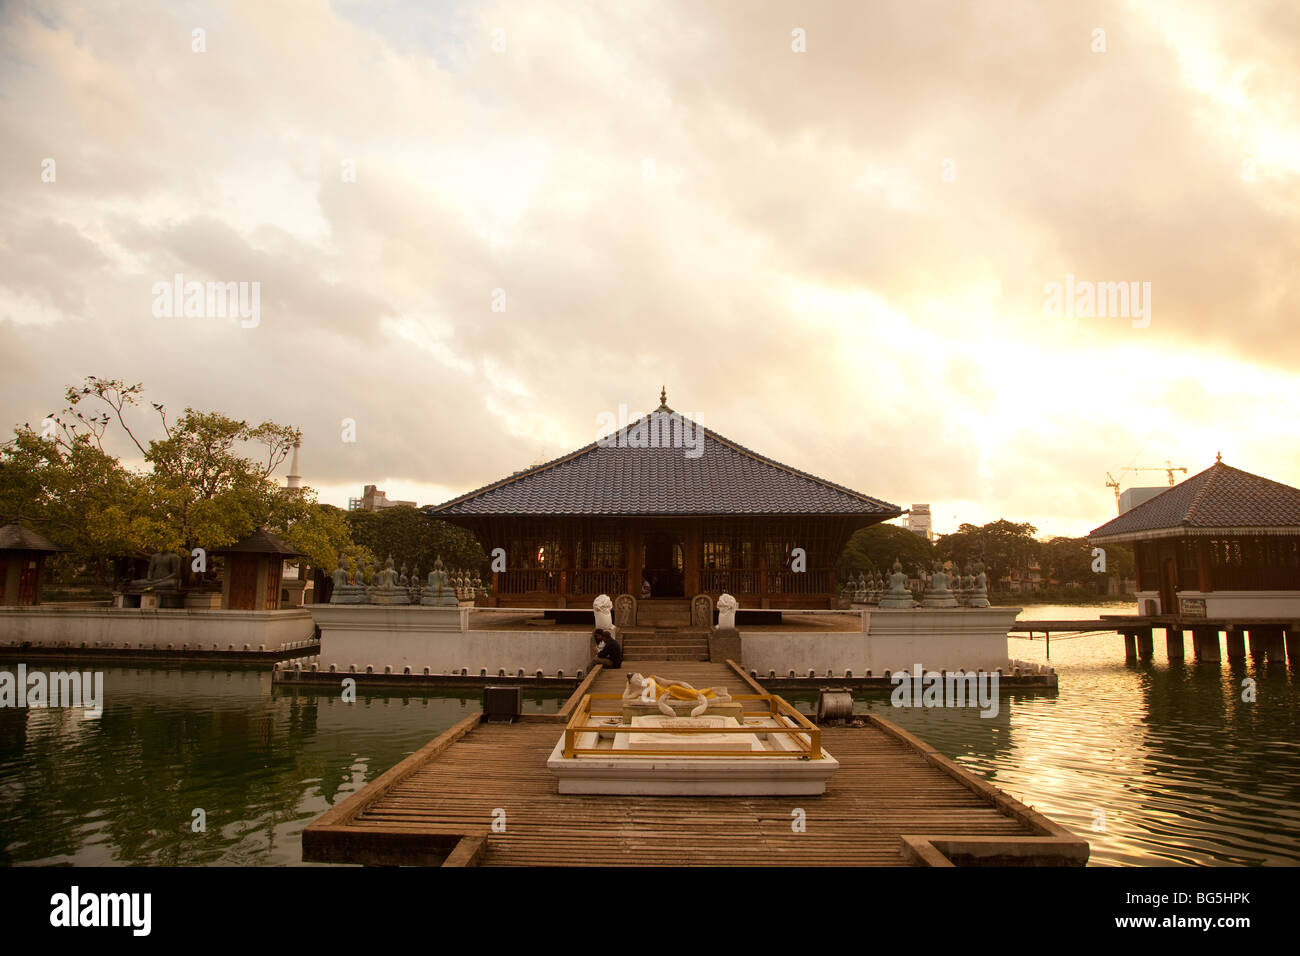 The modern Seema Malaka temple, Colombo, Sri Lanka, temple. It floats on Colombo's Beira Lake. Stock Photo